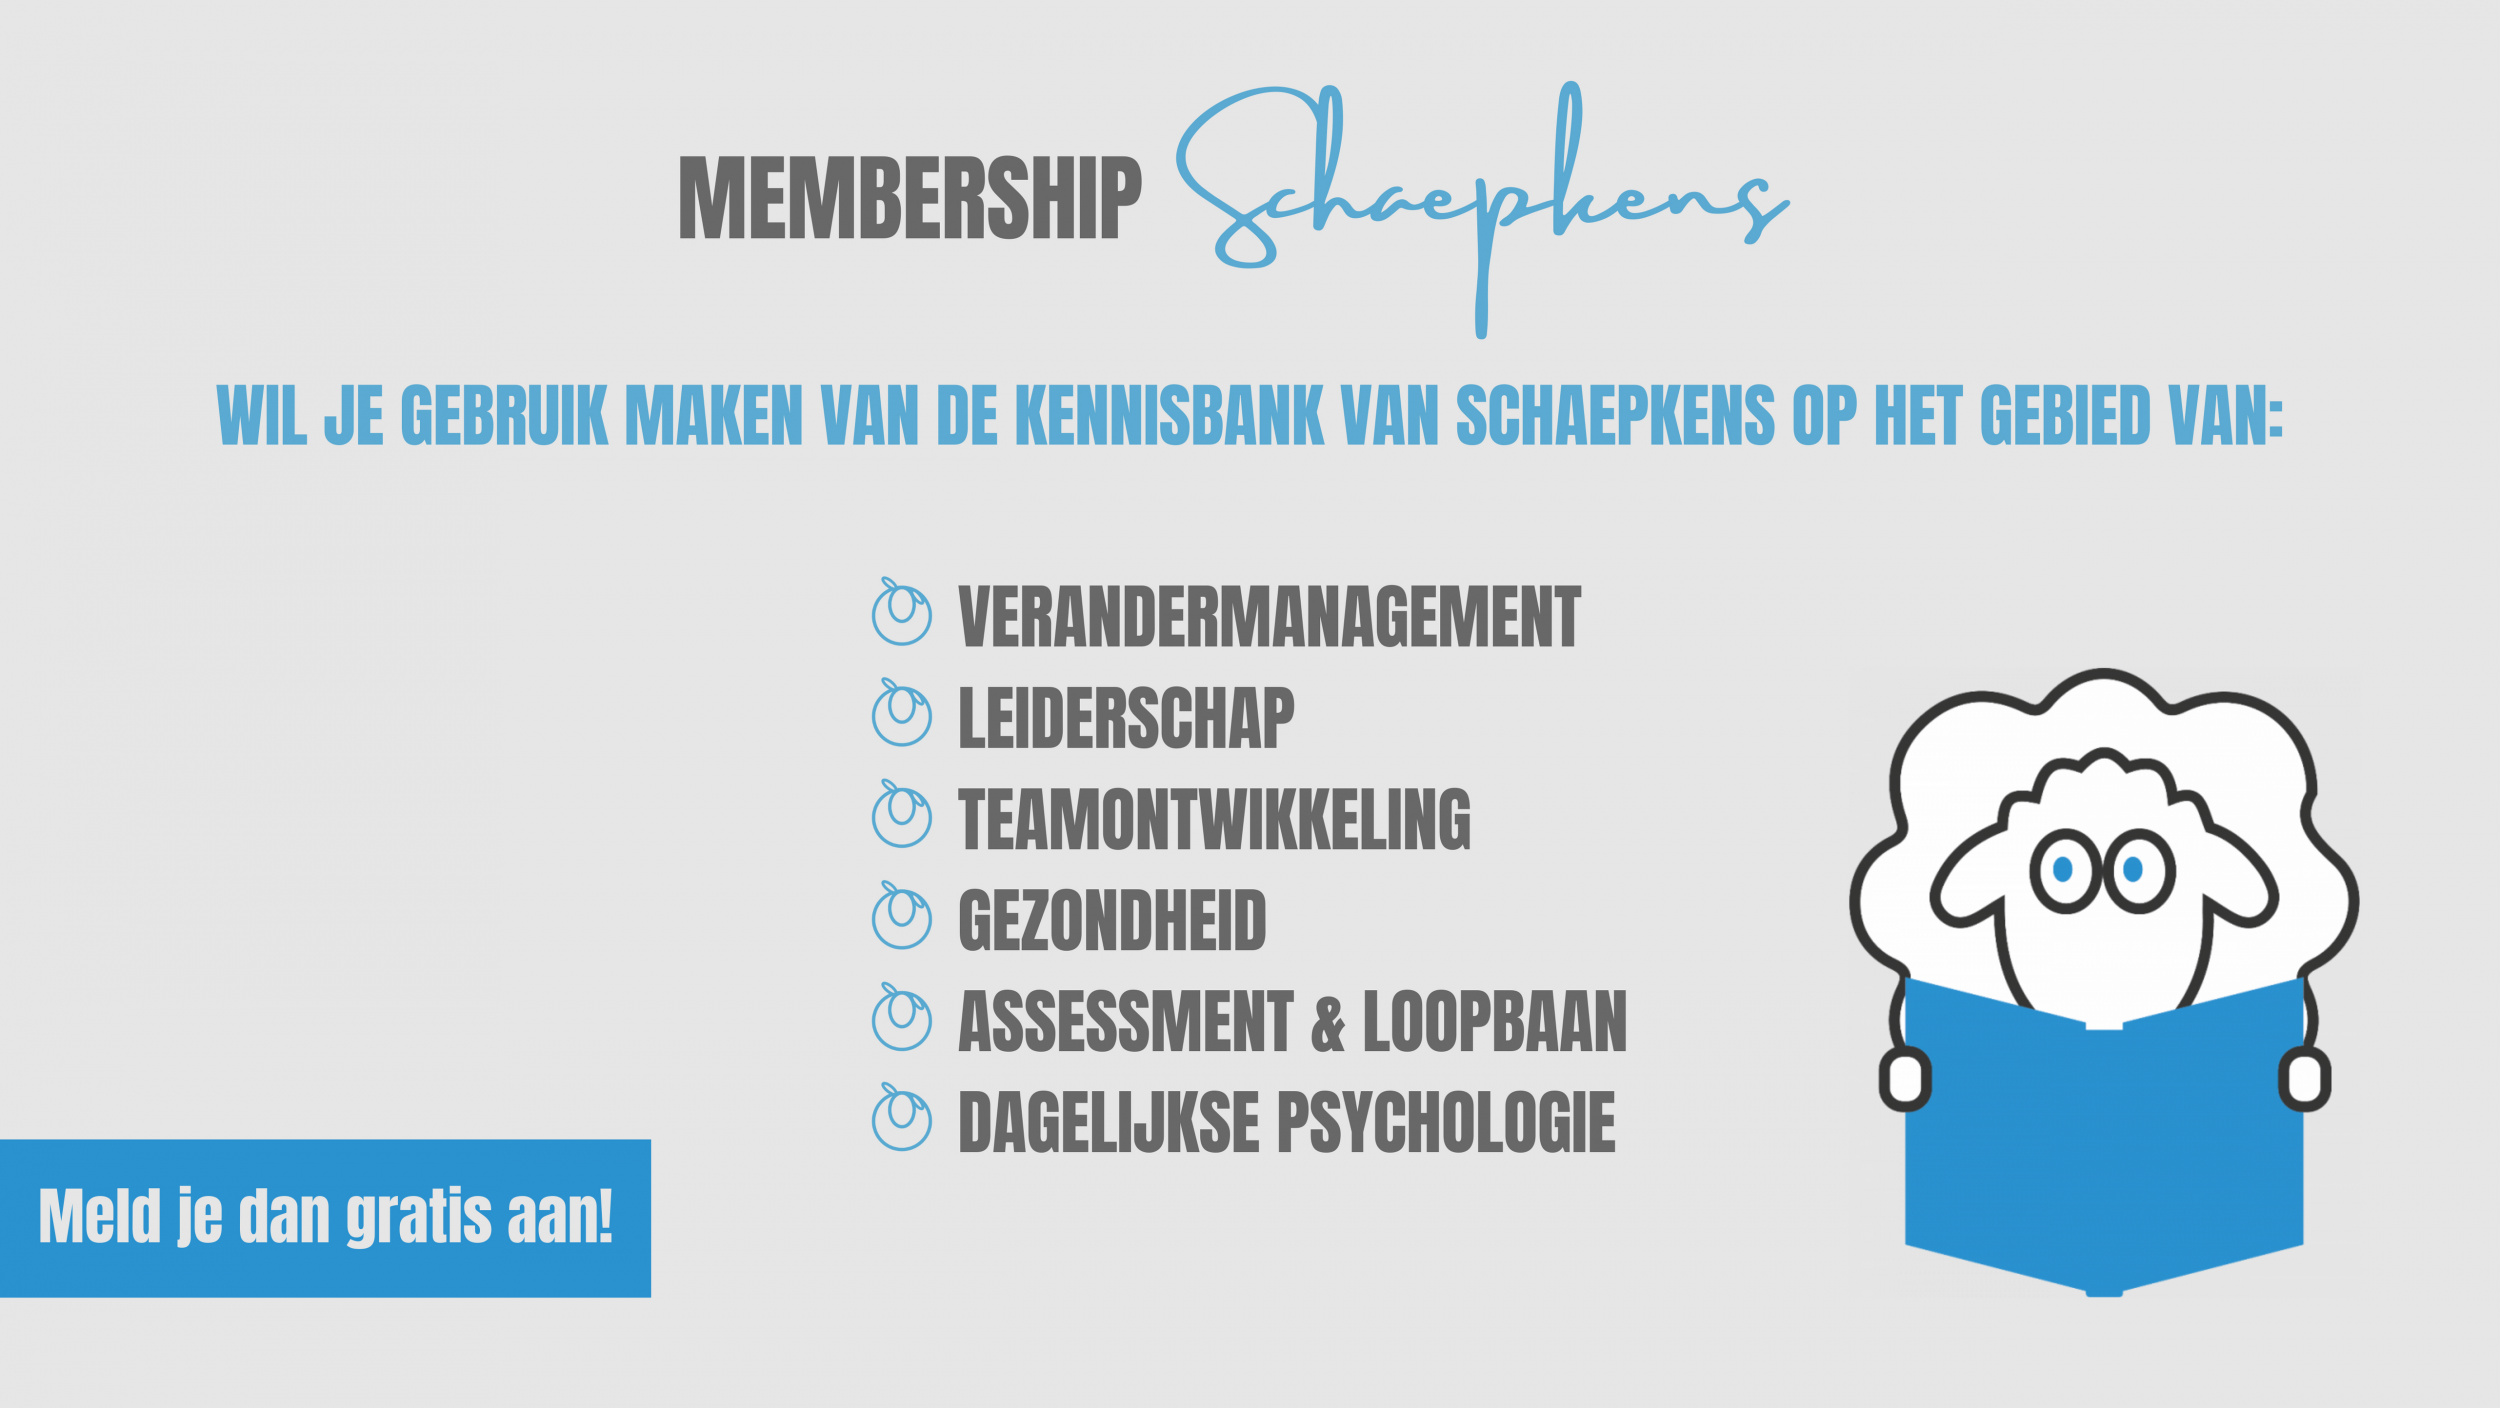 Membership-Schaepkens-website1-1680797230.jpg